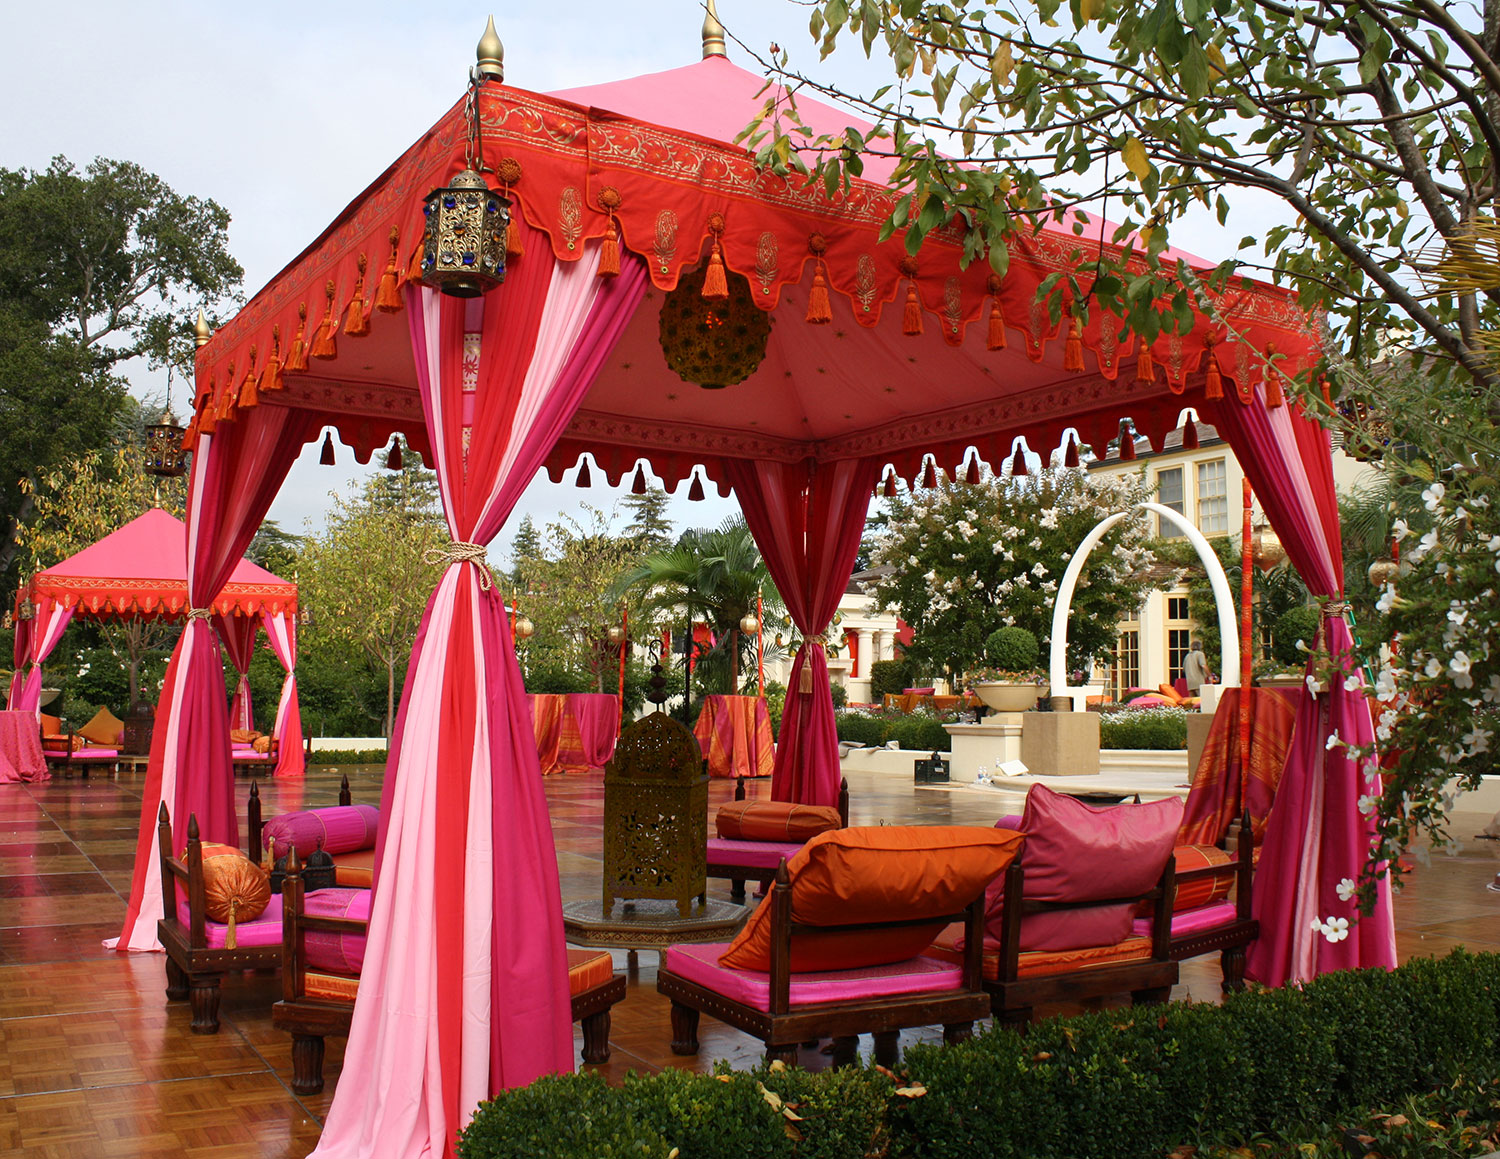 raj-tents-indian-wedding-pink-pergolas.jpg